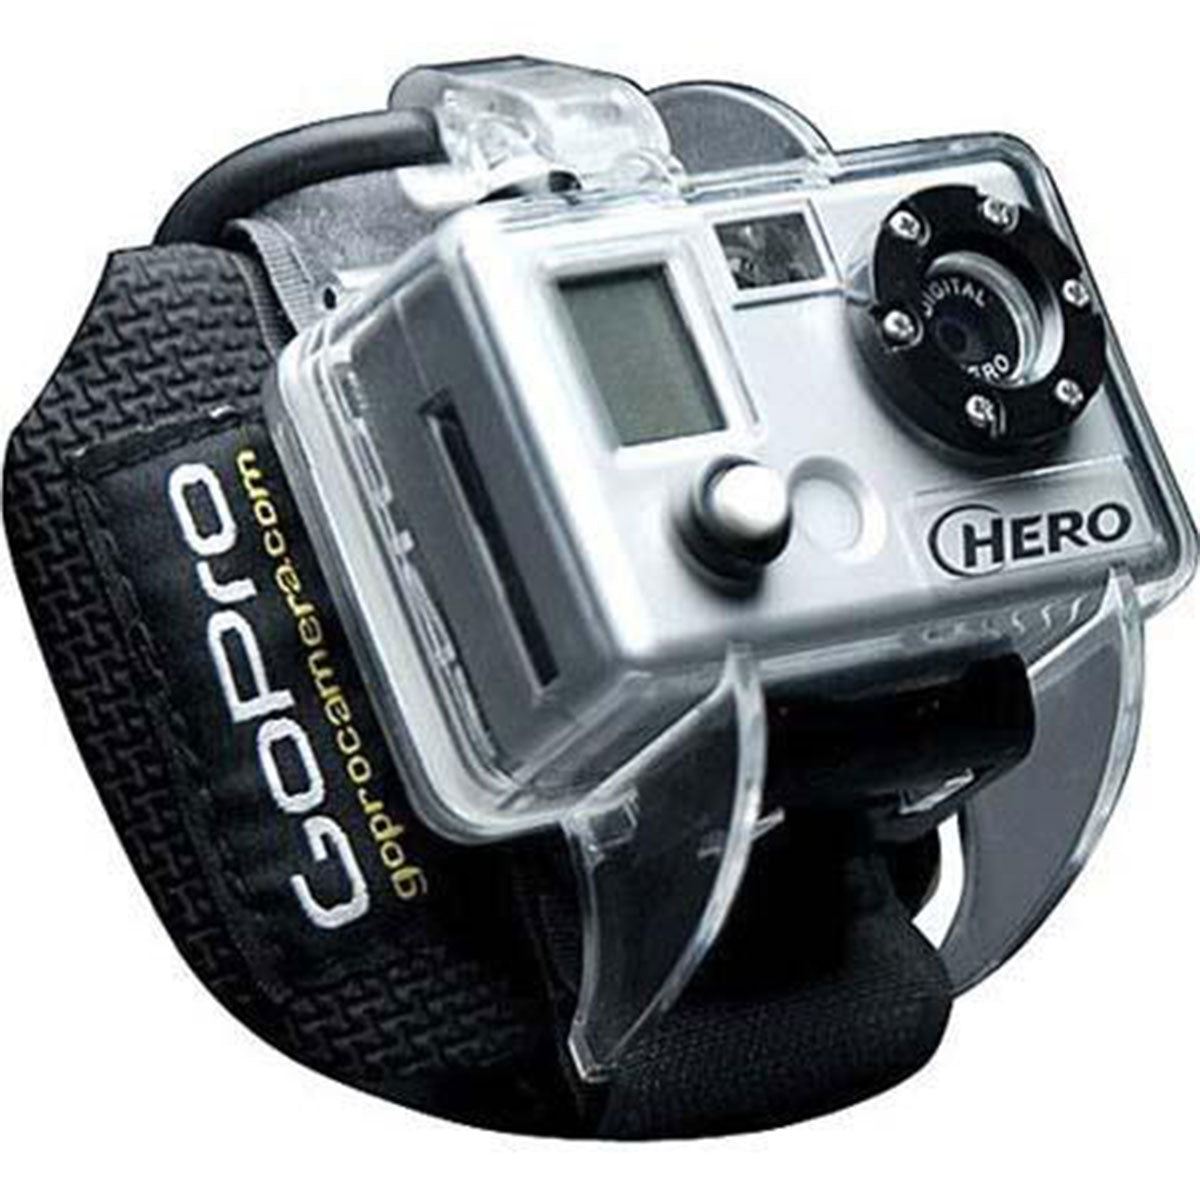 GoPro 5MP Digital Hero Camera and Wrist Housing Waterproof Cameras-GDH50